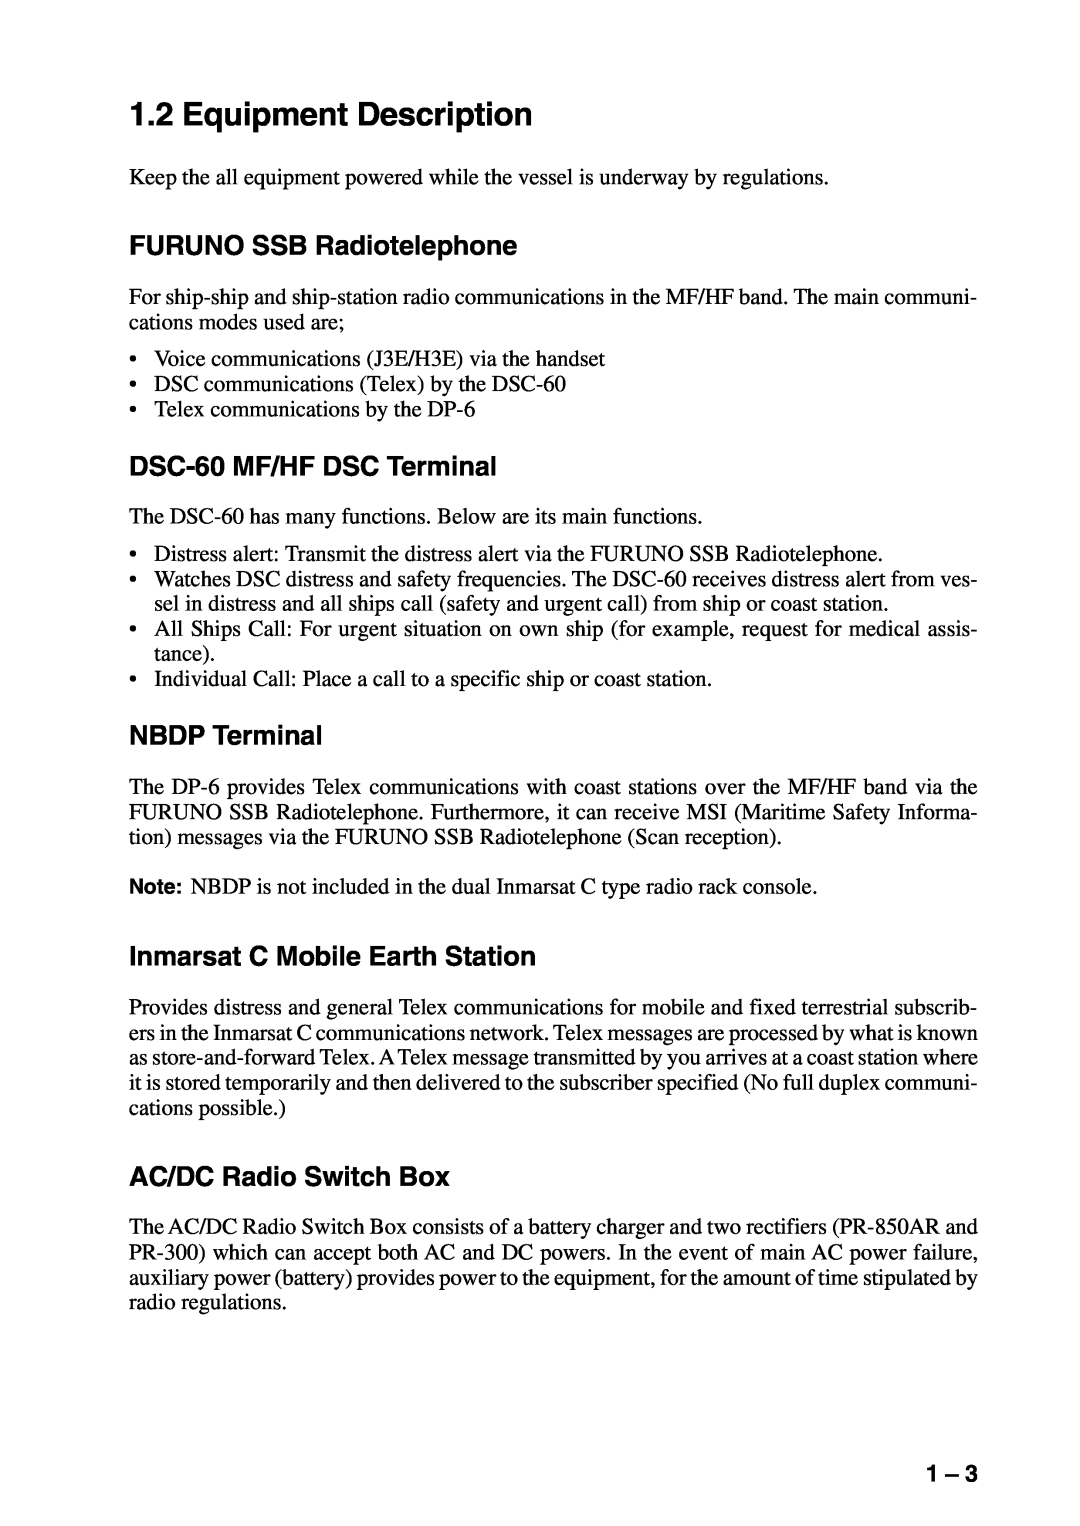 Furuno RC-1500-1T manual Equipment Description, FURUNO SSB Radiotelephone, DSC-60 MF/HF DSC Terminal, NBDP Terminal 